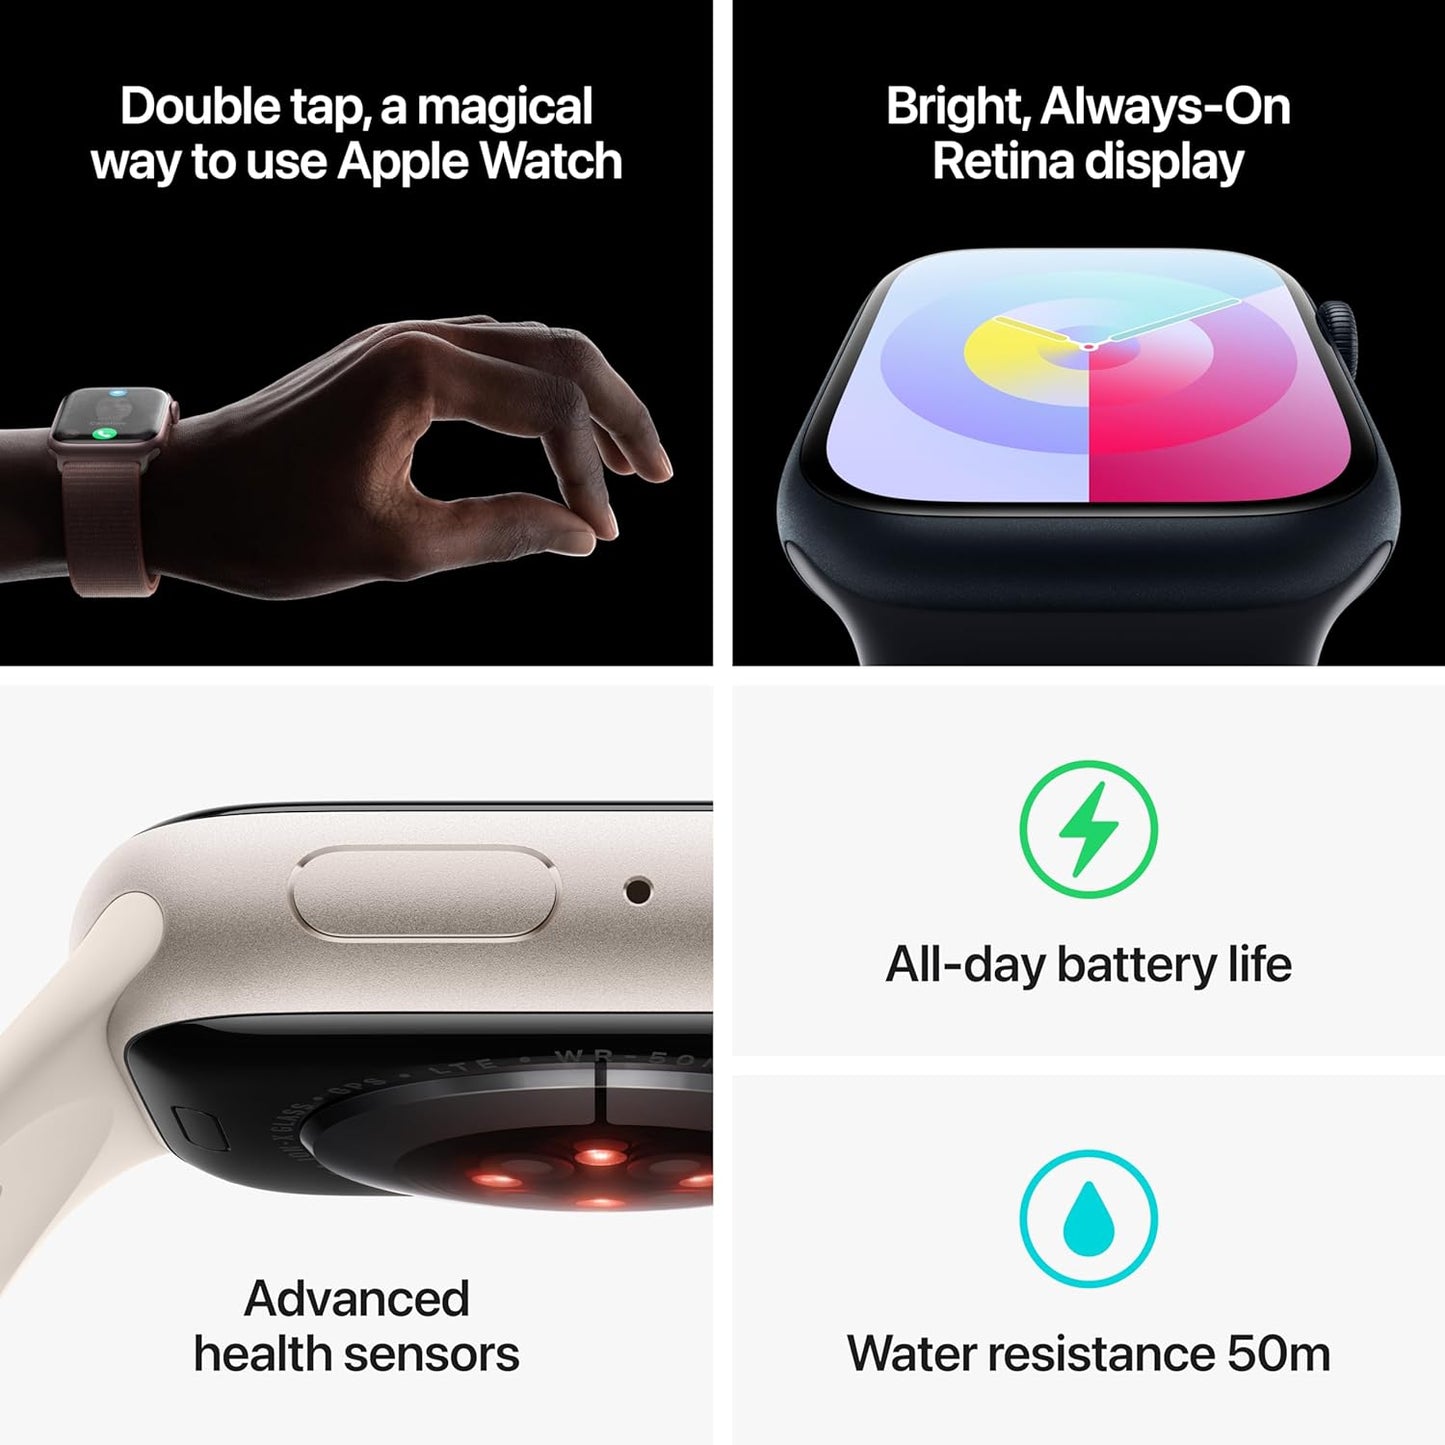 Apple Watch Series 9 [GPS + Cellular 45mm] ساعة ذكية مع هيكل ذهبي من الفولاذ المقاوم للصدأ مع حلقة ميلانو ذهبية. جهاز تعقب اللياقة البدنية، وتطبيقات الأكسجين في الدم وتخطيط القلب، وشاشة شبكية العين التي تعمل دائمًا 